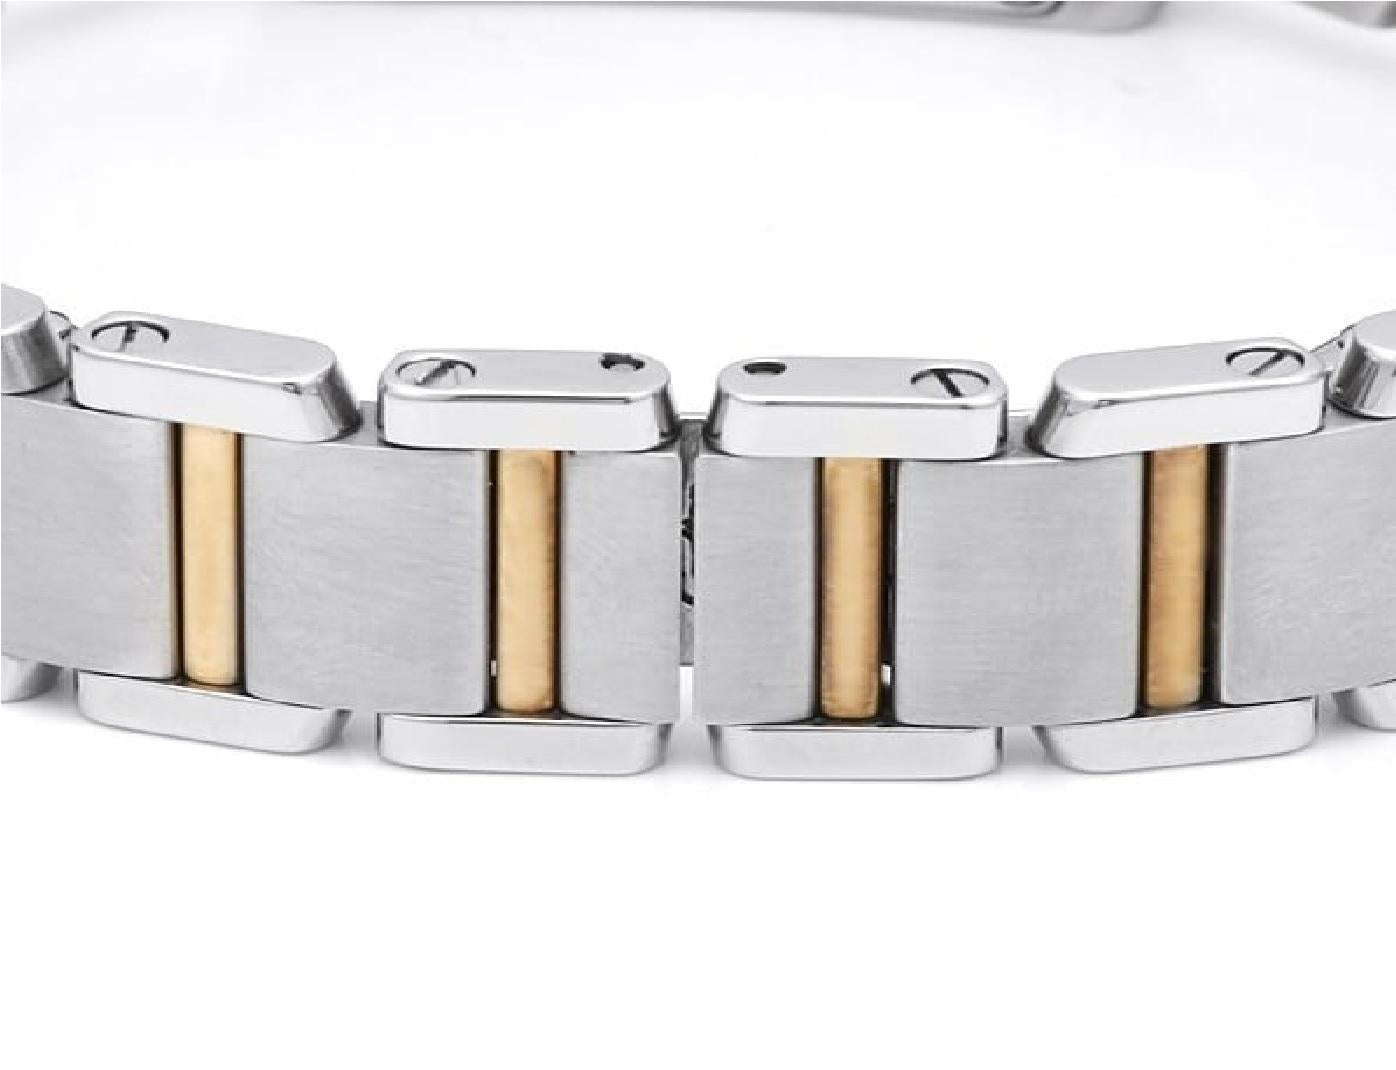 Cartier Tank Française SM W51007Q4 Gold & Steel Ladies Watch - Luxurious 3